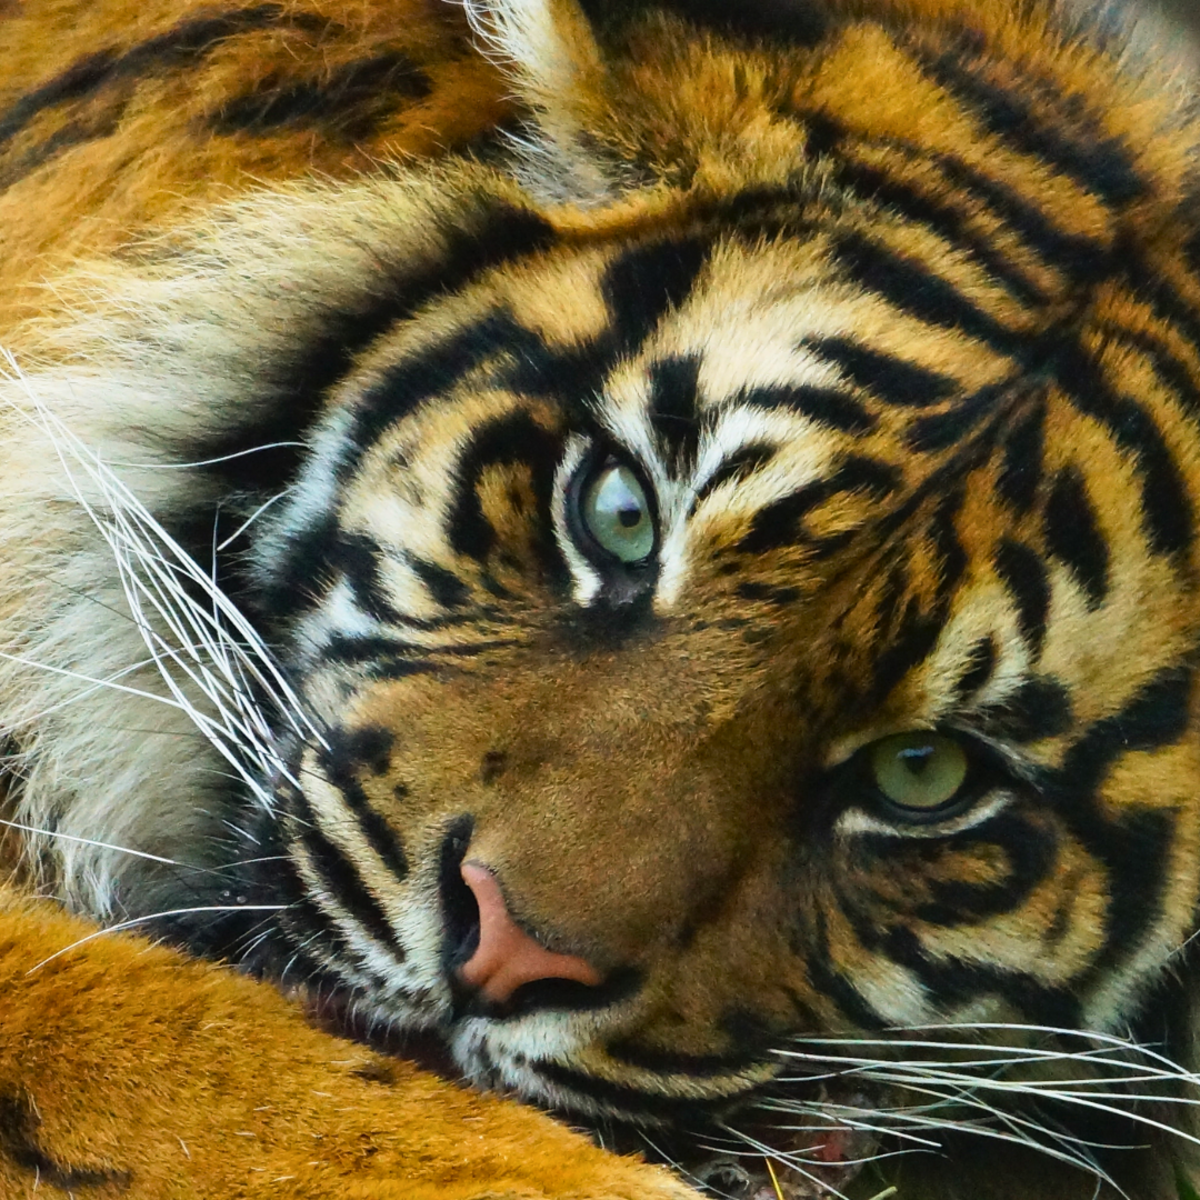 The Amazing and Endangered Sumatran Tiger